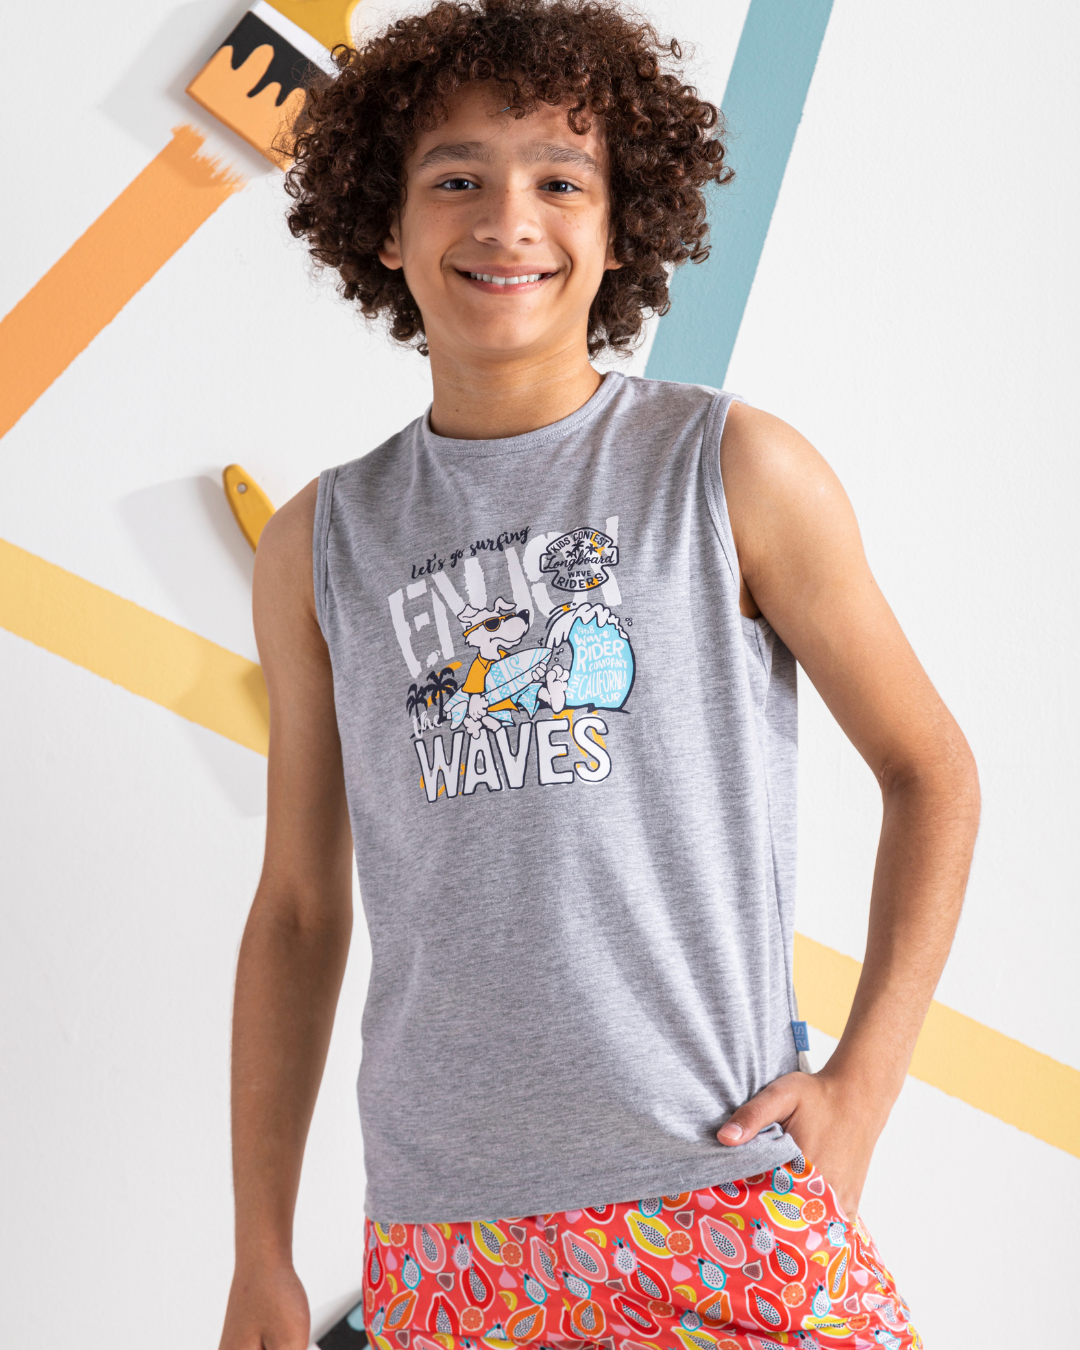 Enjoy Waves T-shirt for boys, 100% cotton